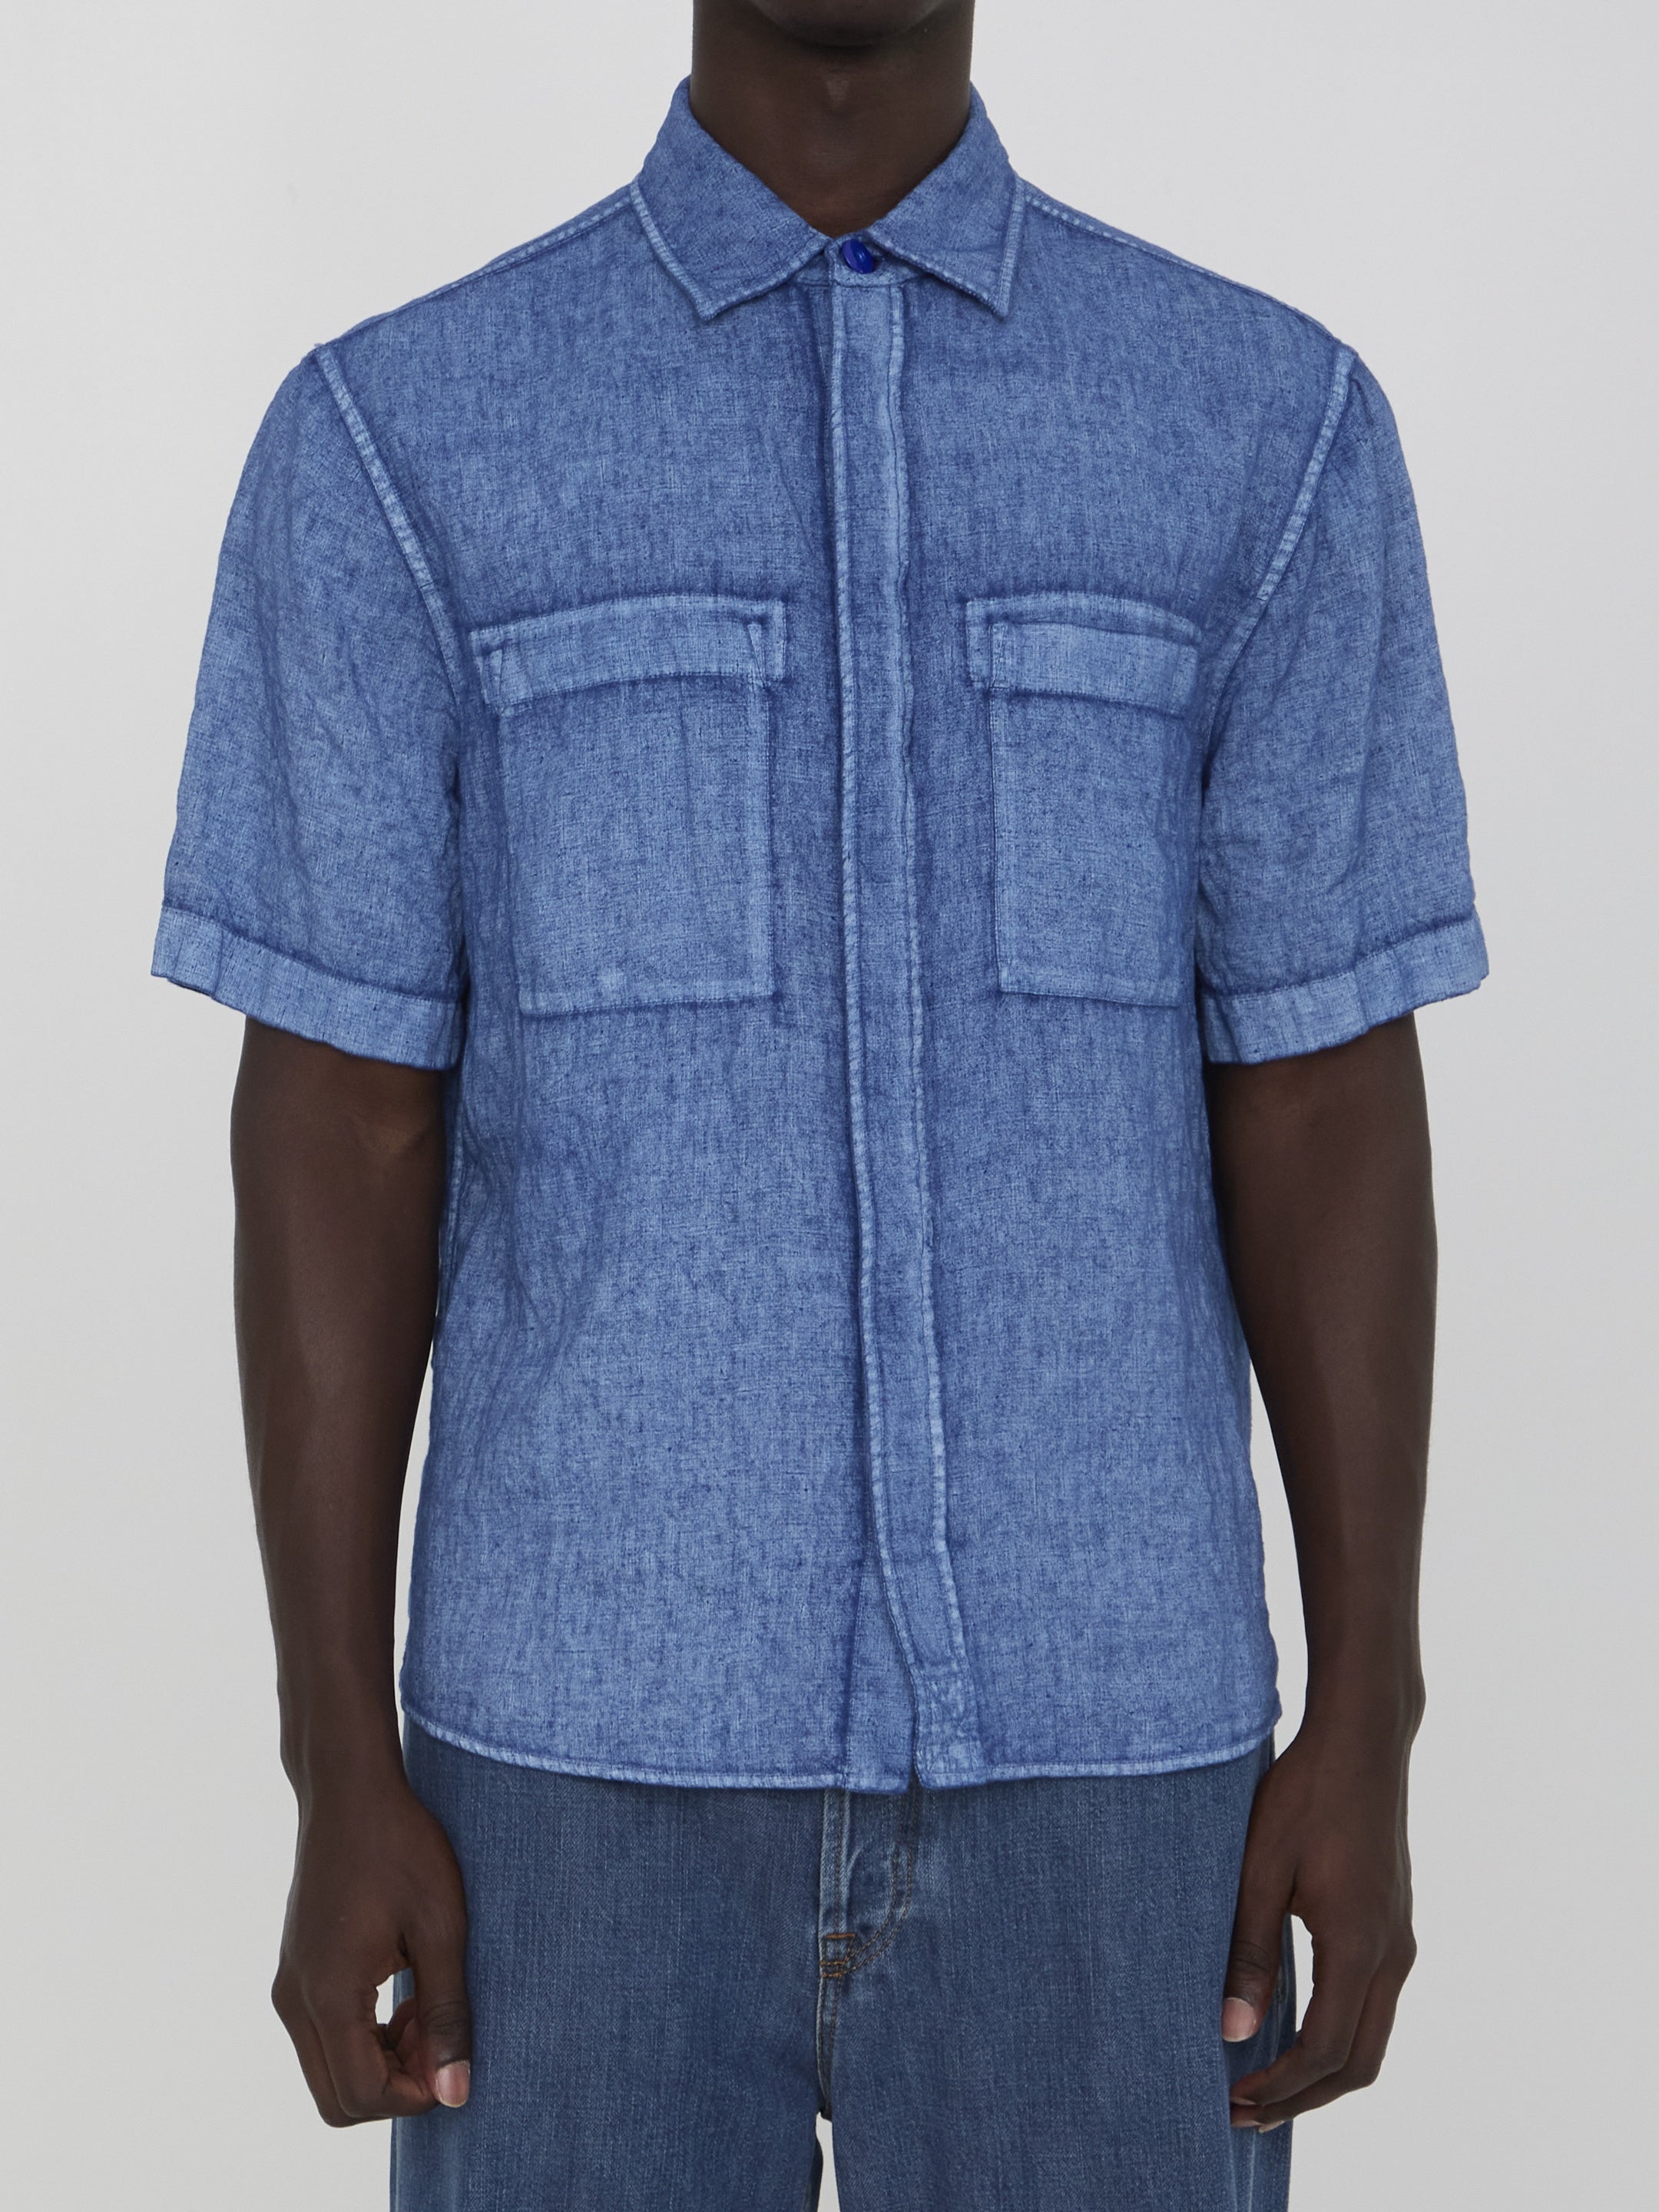 BURBERRY-OUTLET-SALE-Linen-shirt-Shirts-M-BLUE-ARCHIVE-COLLECTION.jpg